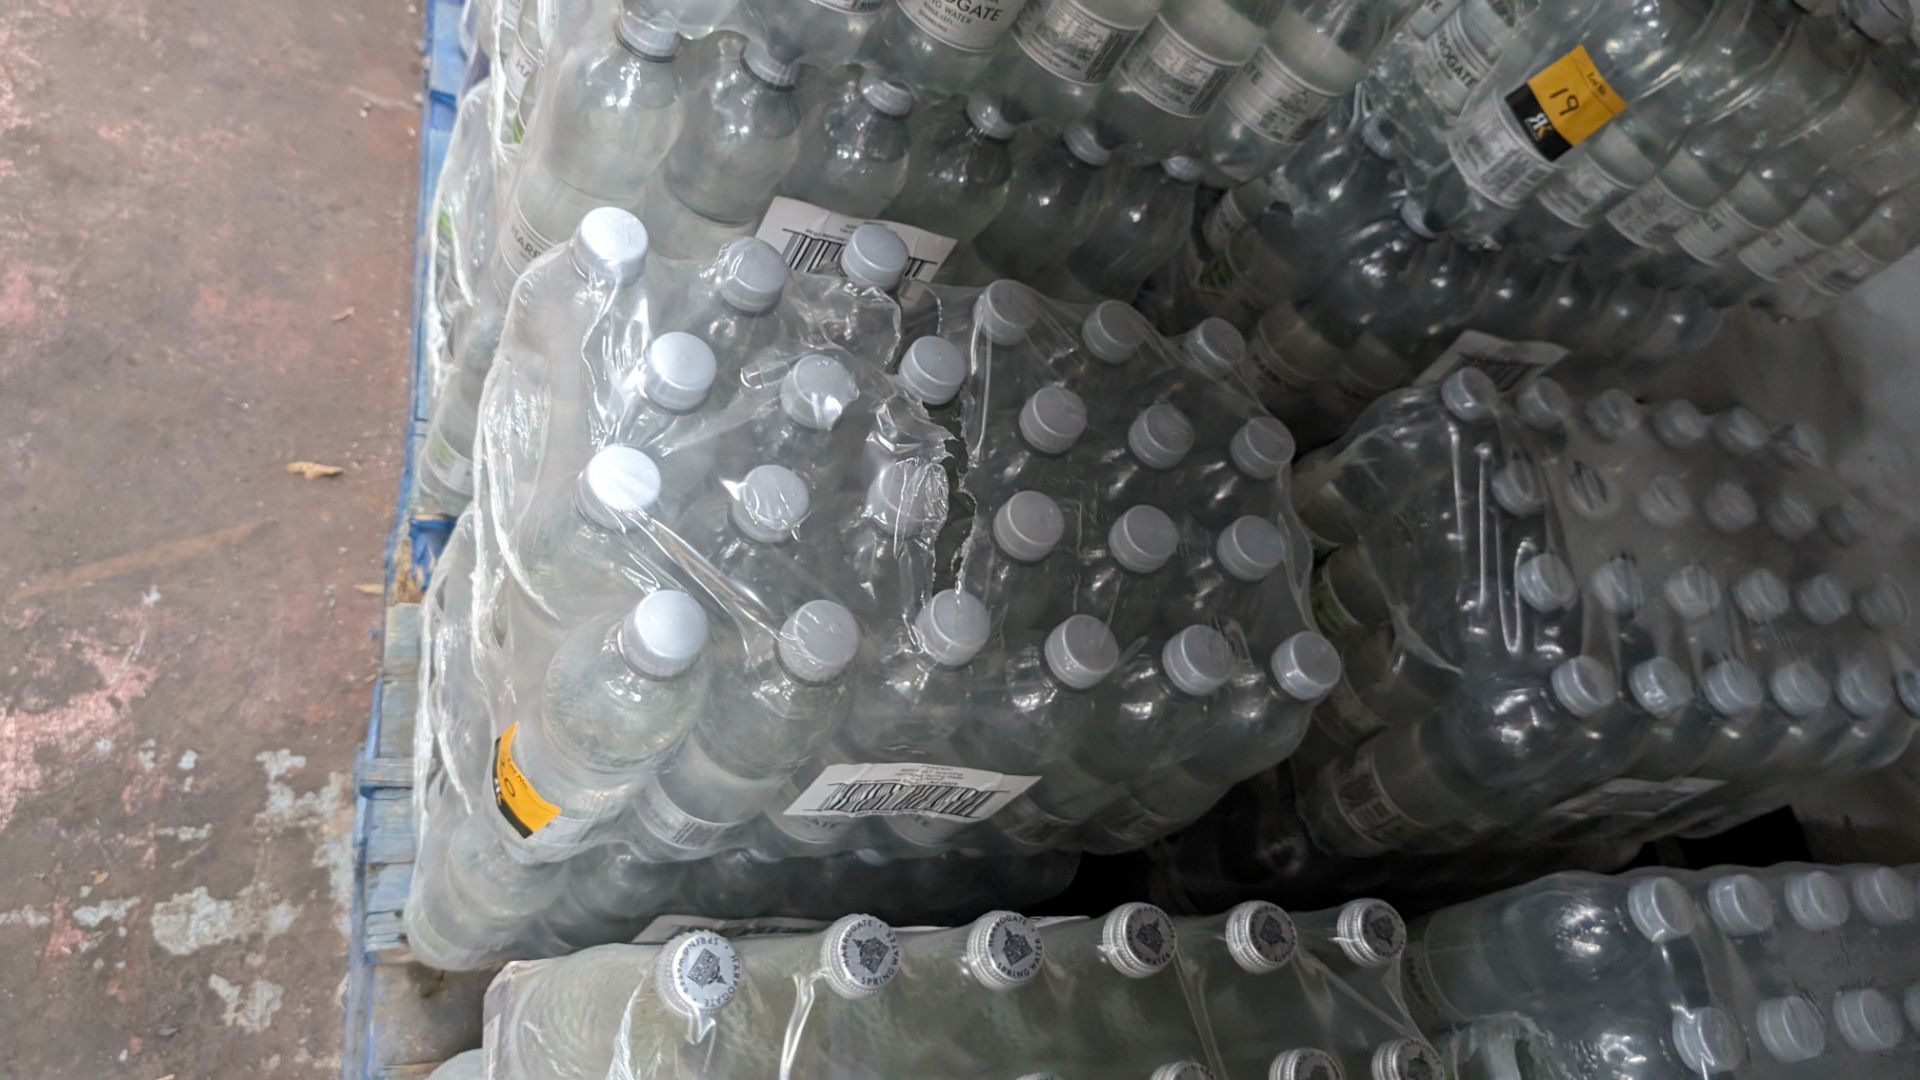 96 off 500ml bottles of Harrogate sparkling spring water, best before date July 2024 (4 cartons) - Image 3 of 5